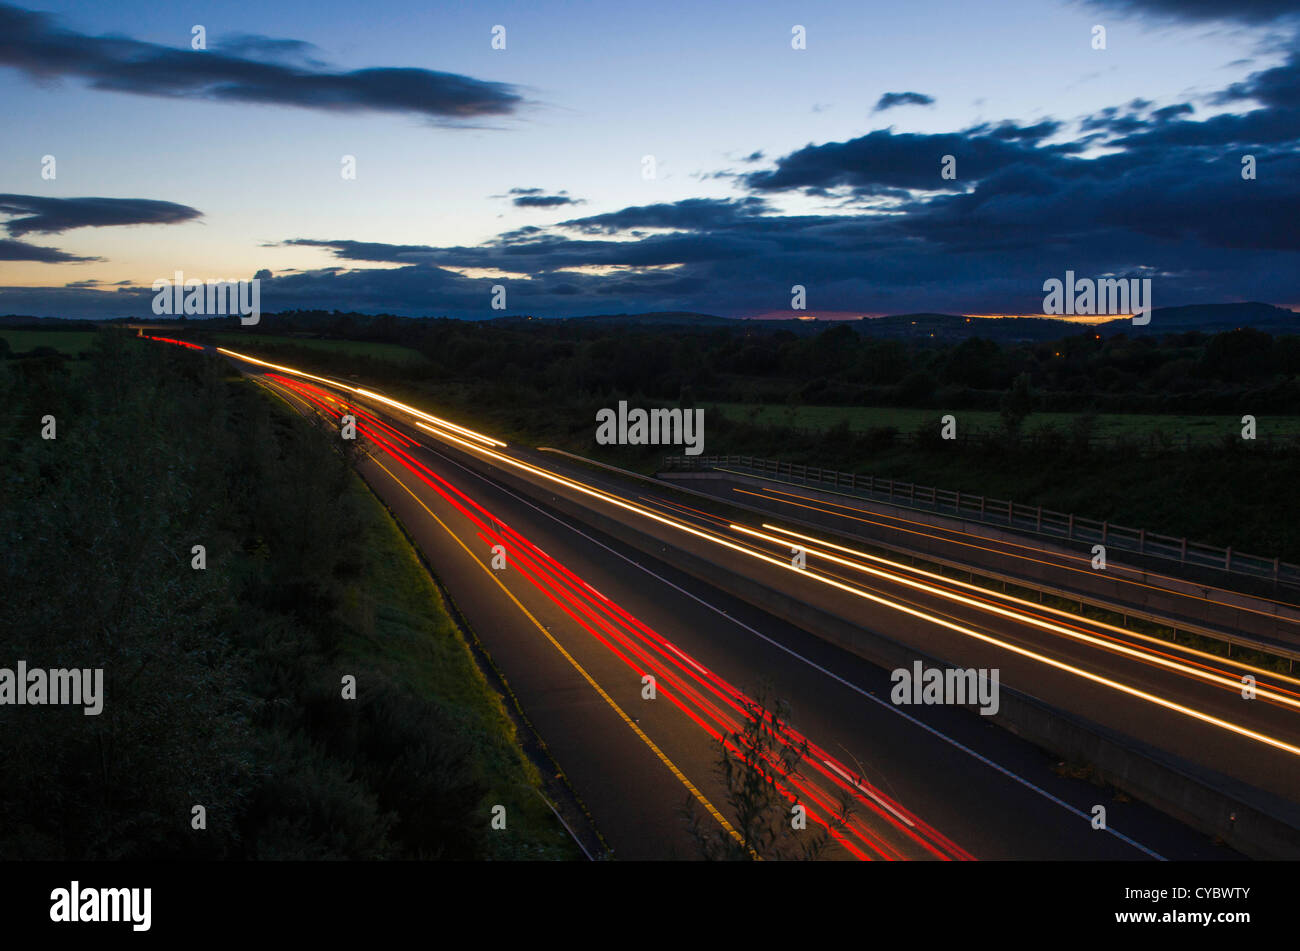 Light streaks on a motorway at night, UK Stock Photo